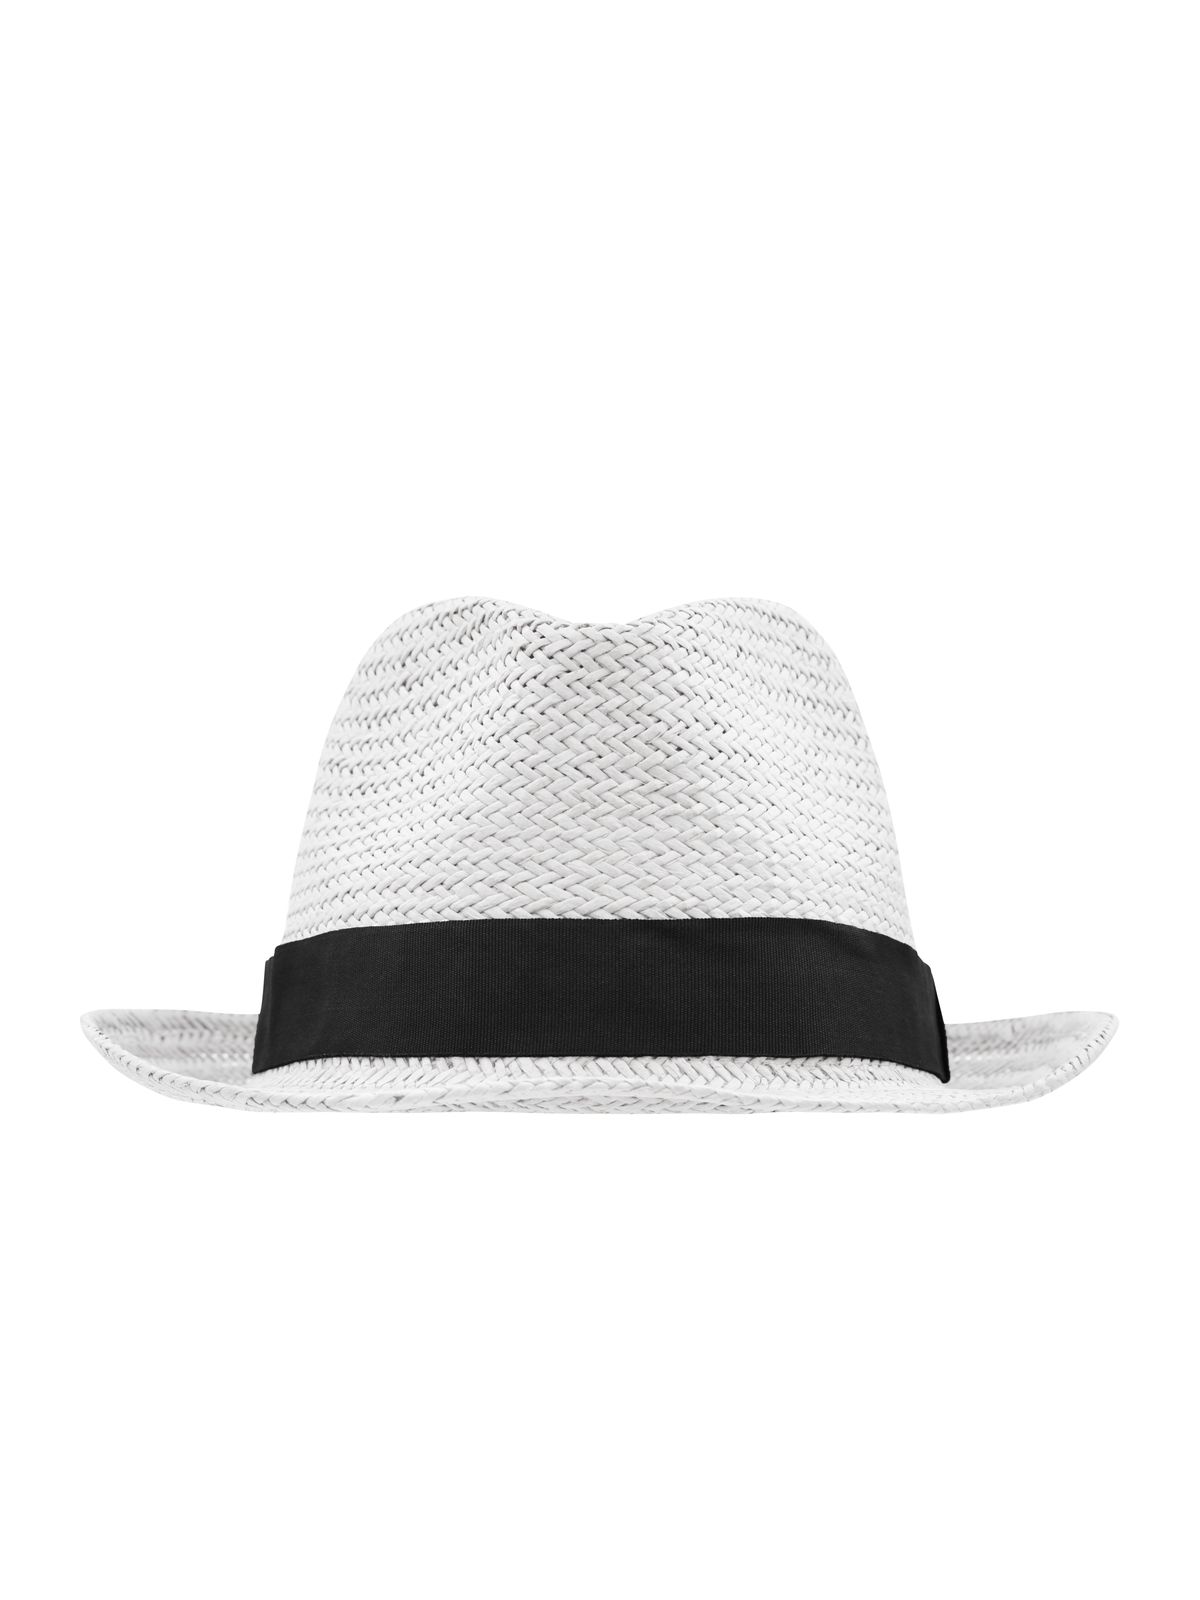 urban-hat-white-black.webp